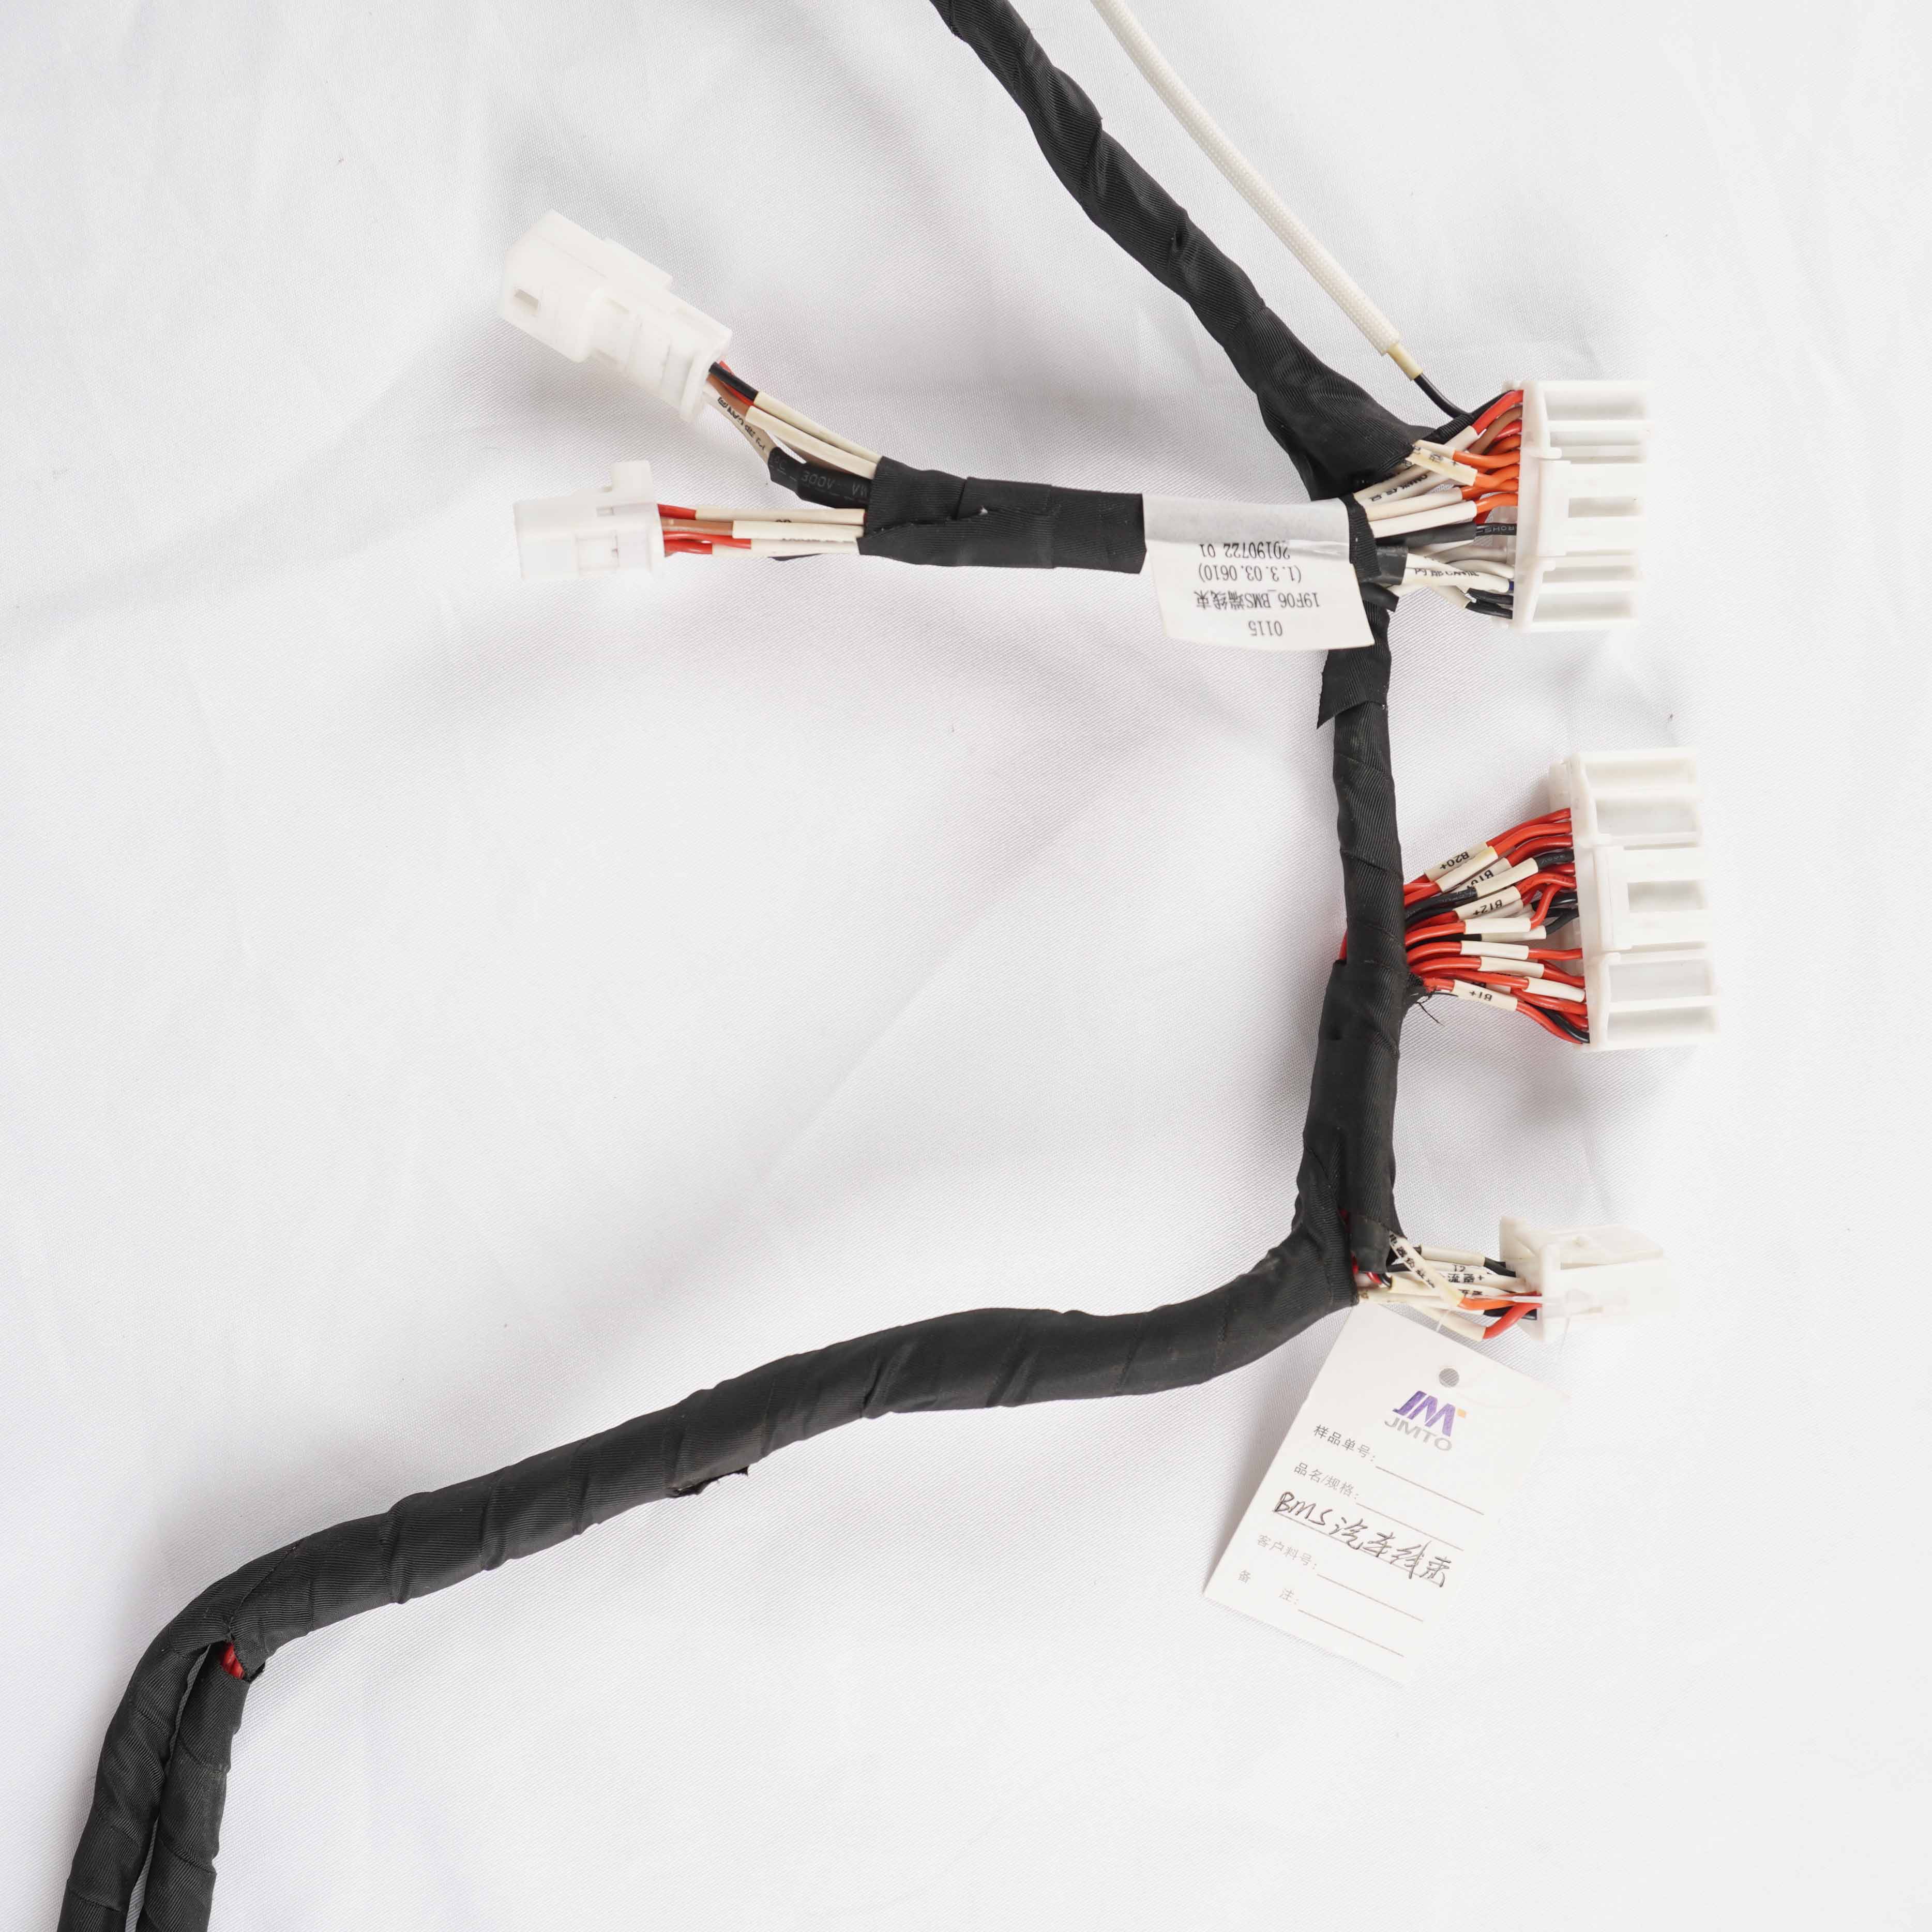 Bms automotive wiring harness